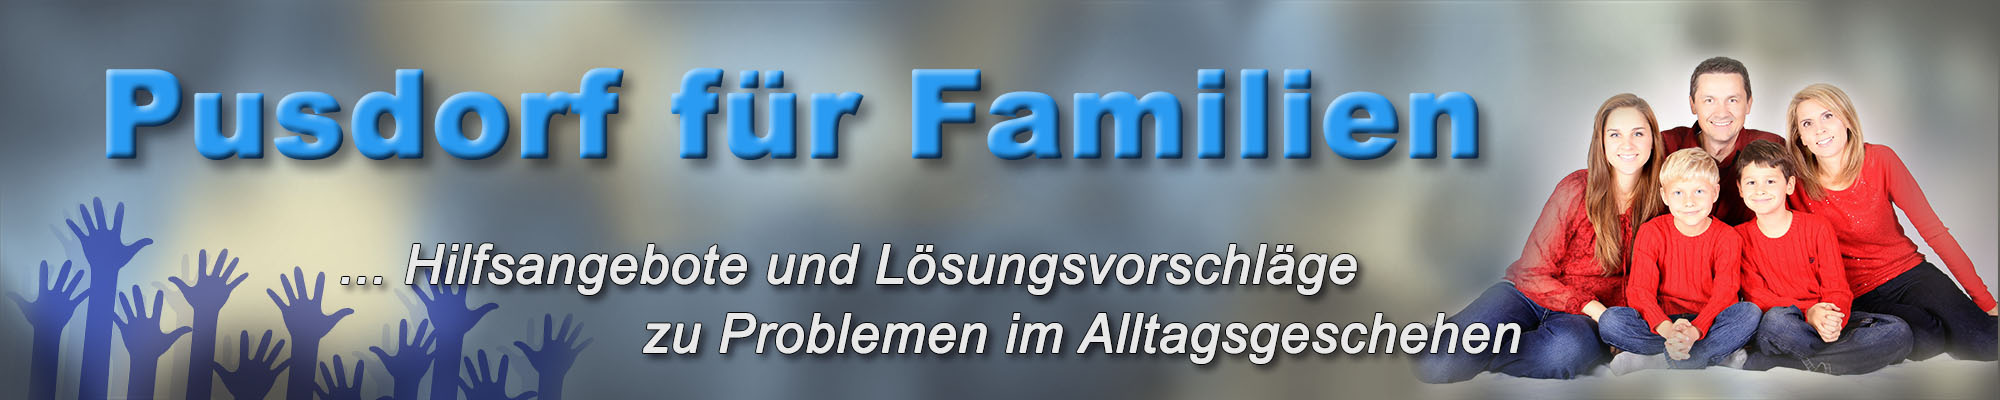 pusdorf.info - FiS: Familie im Stadtteil ...